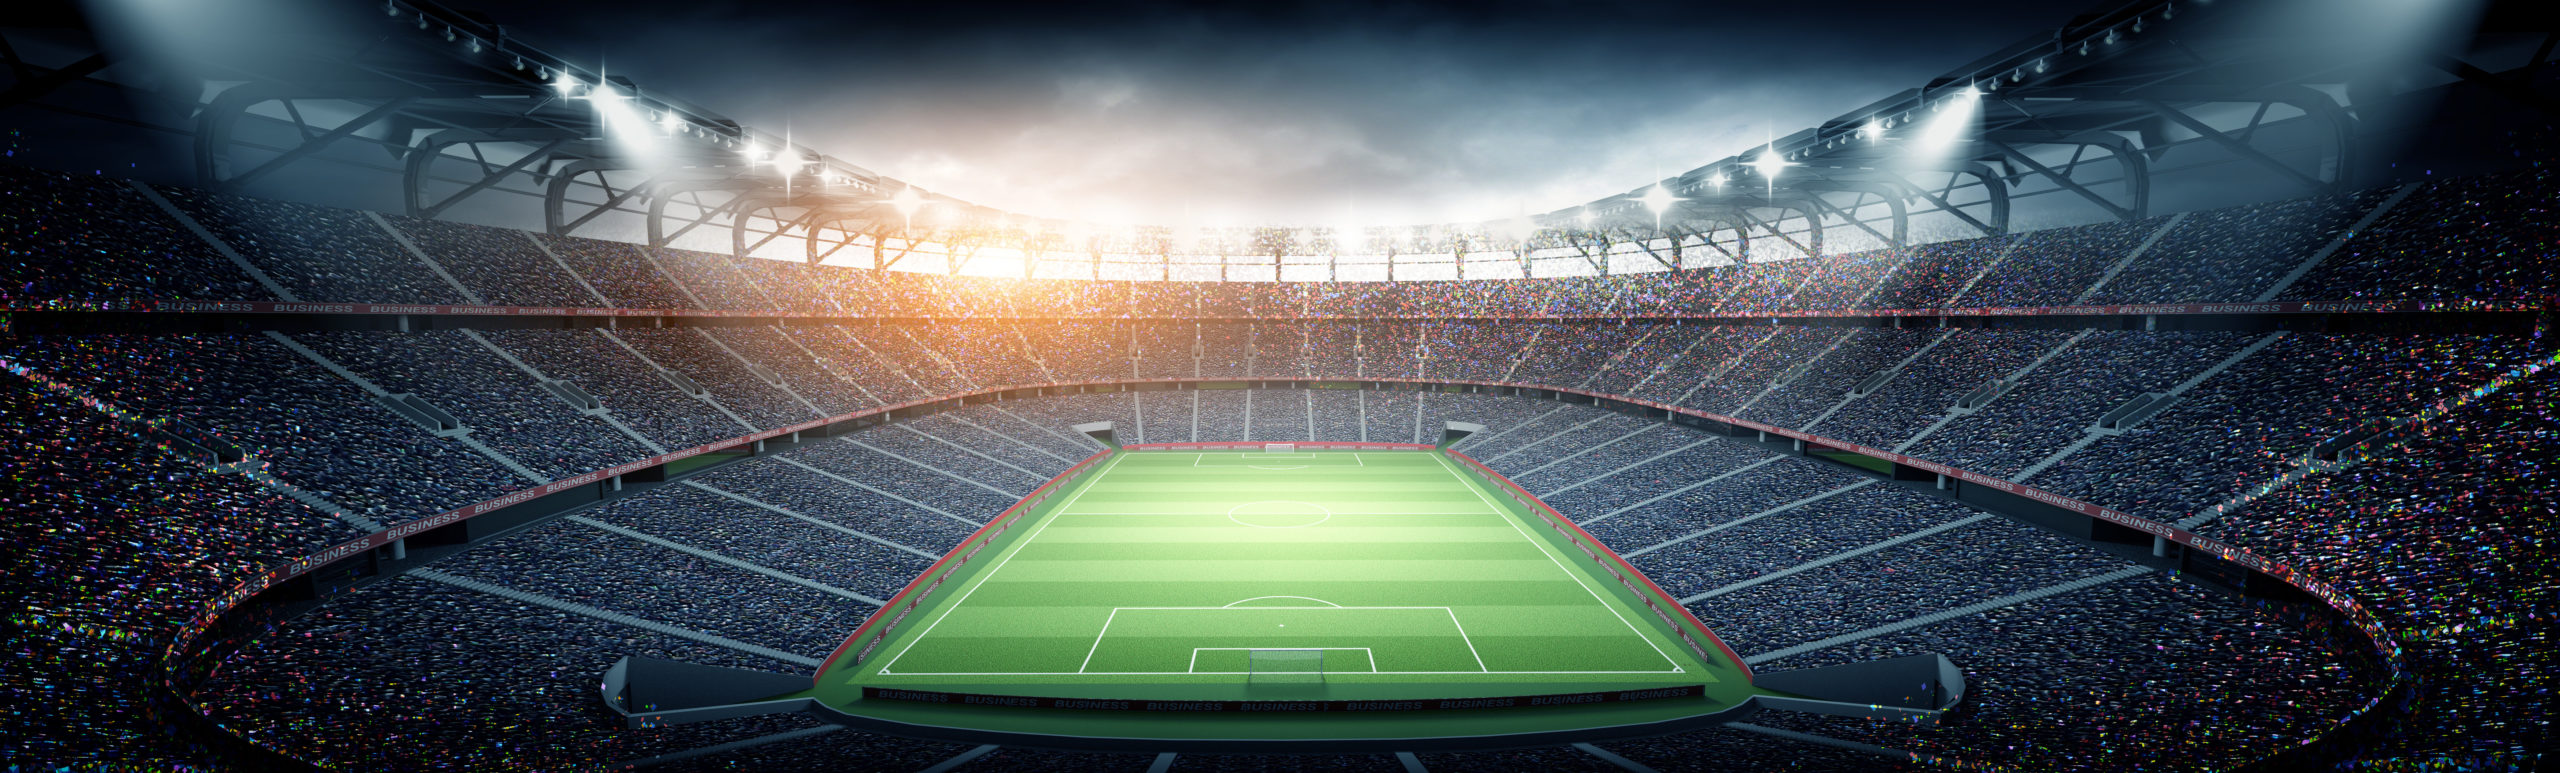 2021 Fantasy Football Flex Scoring Targets: Draft Strategies to Minimize  Risk and Maximize Scoring - Sports Illustrated